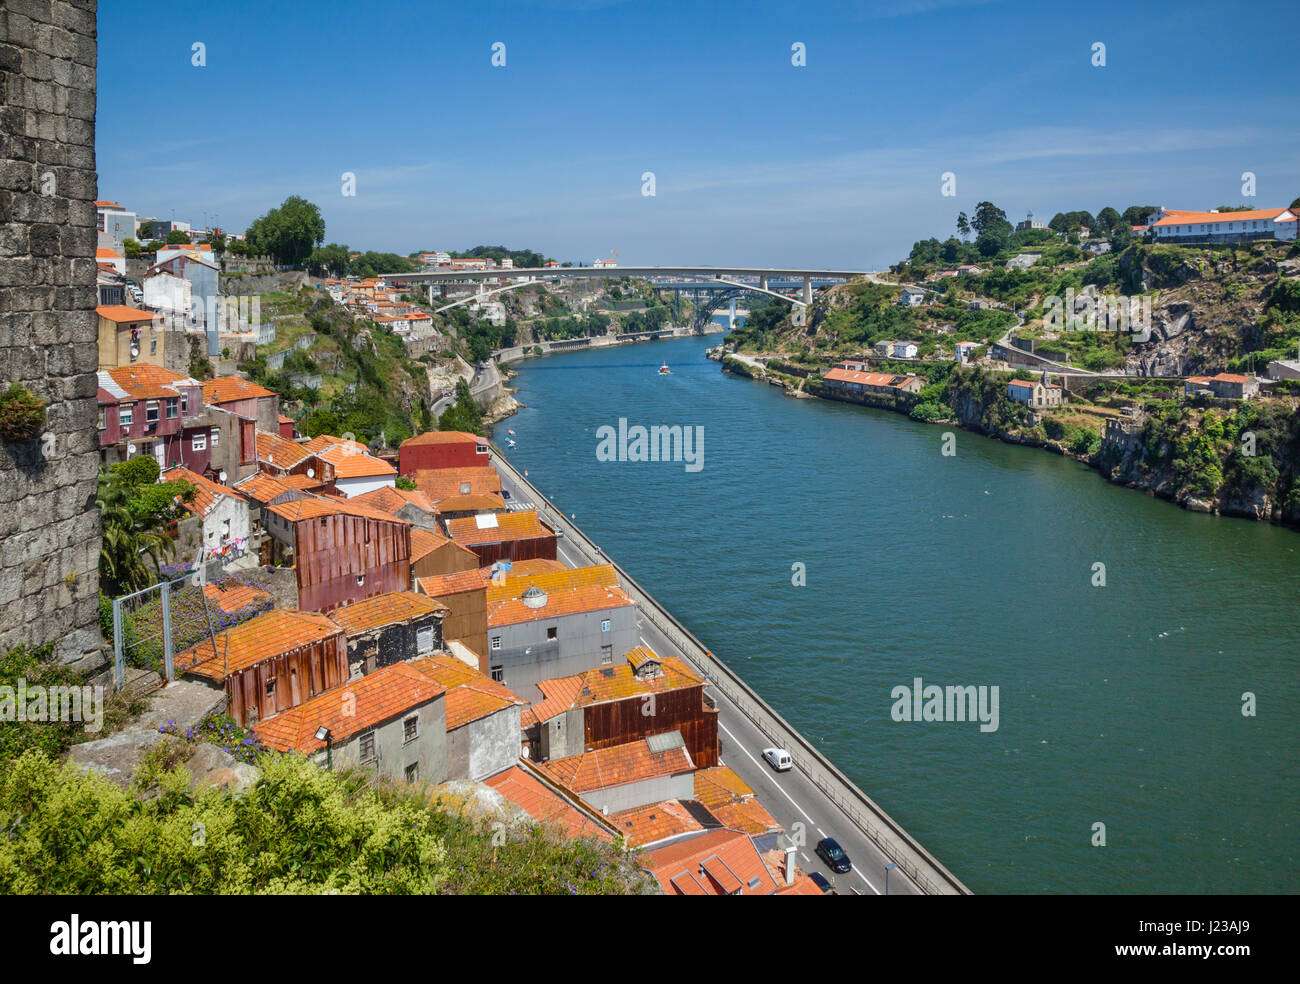 Portugal, Region Norte, Porto, view of the Douro River from Murallas fernadinas (Ferdinant Walls) with Puente do Infante and Puente Maria Pia in the b Stock Photo